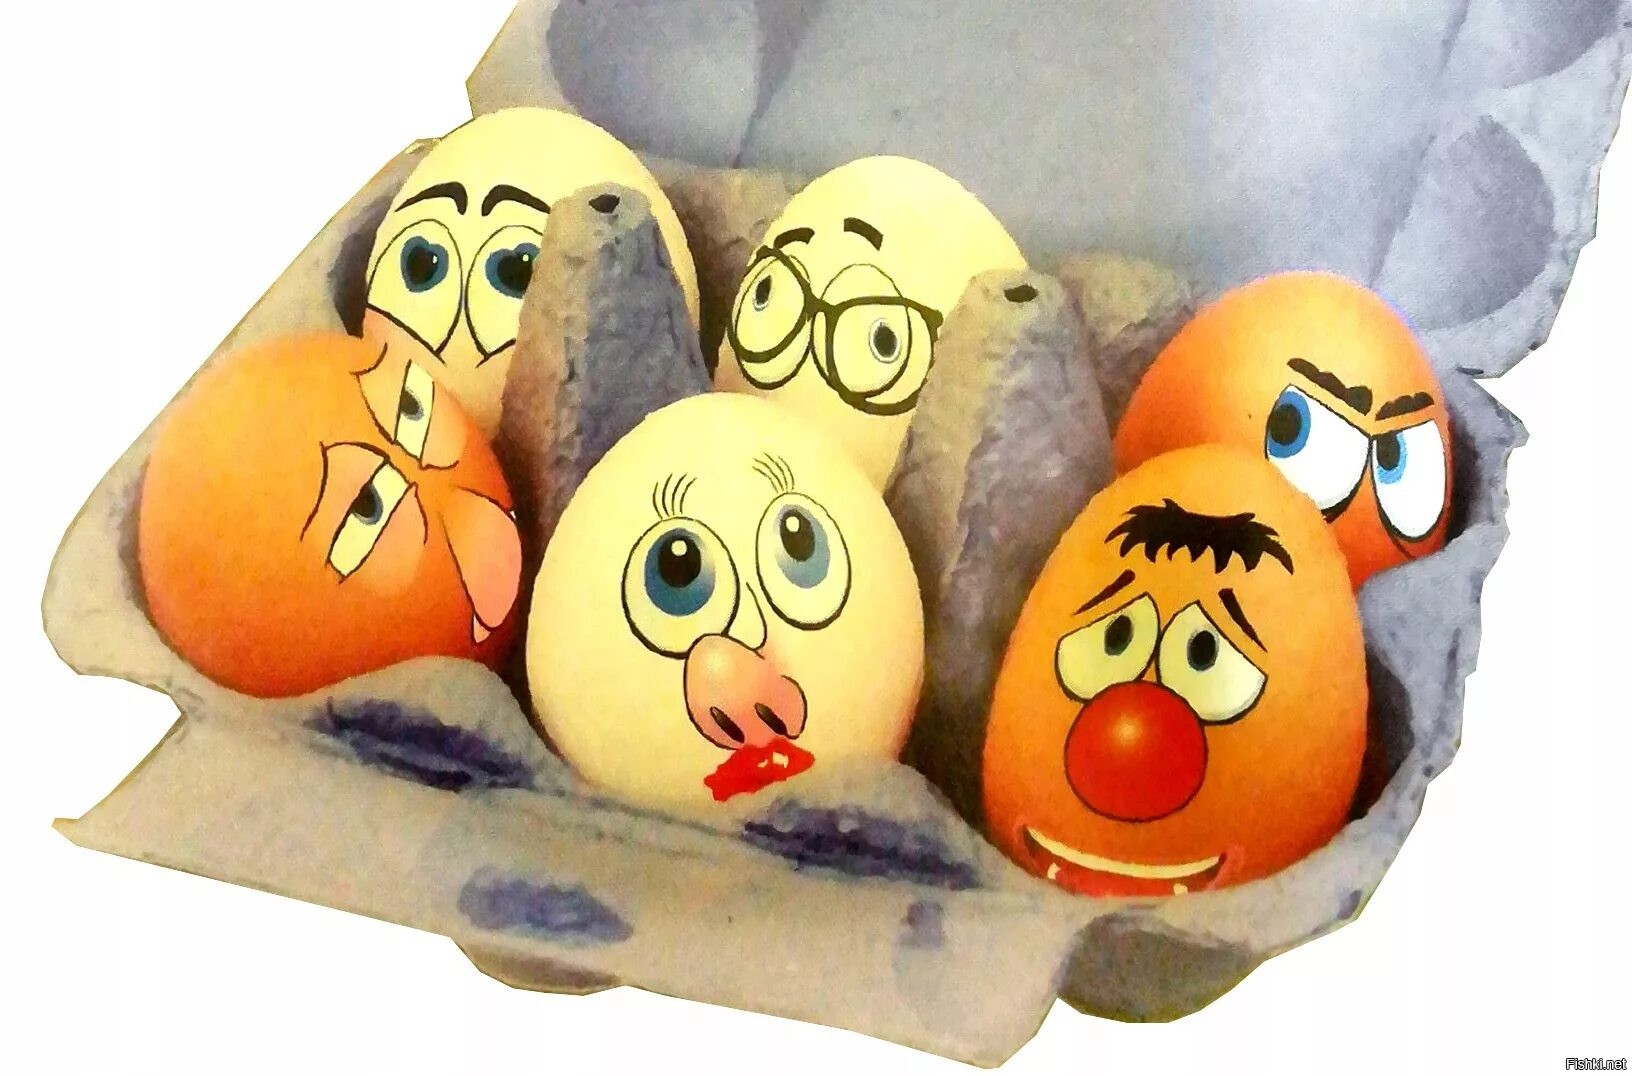 Смайлик яйца. Яйцо Пасха. Веселые яйца на Пасху. Яйца на Пасху смешные. Смешные рожицы на пасхальных яйцах.